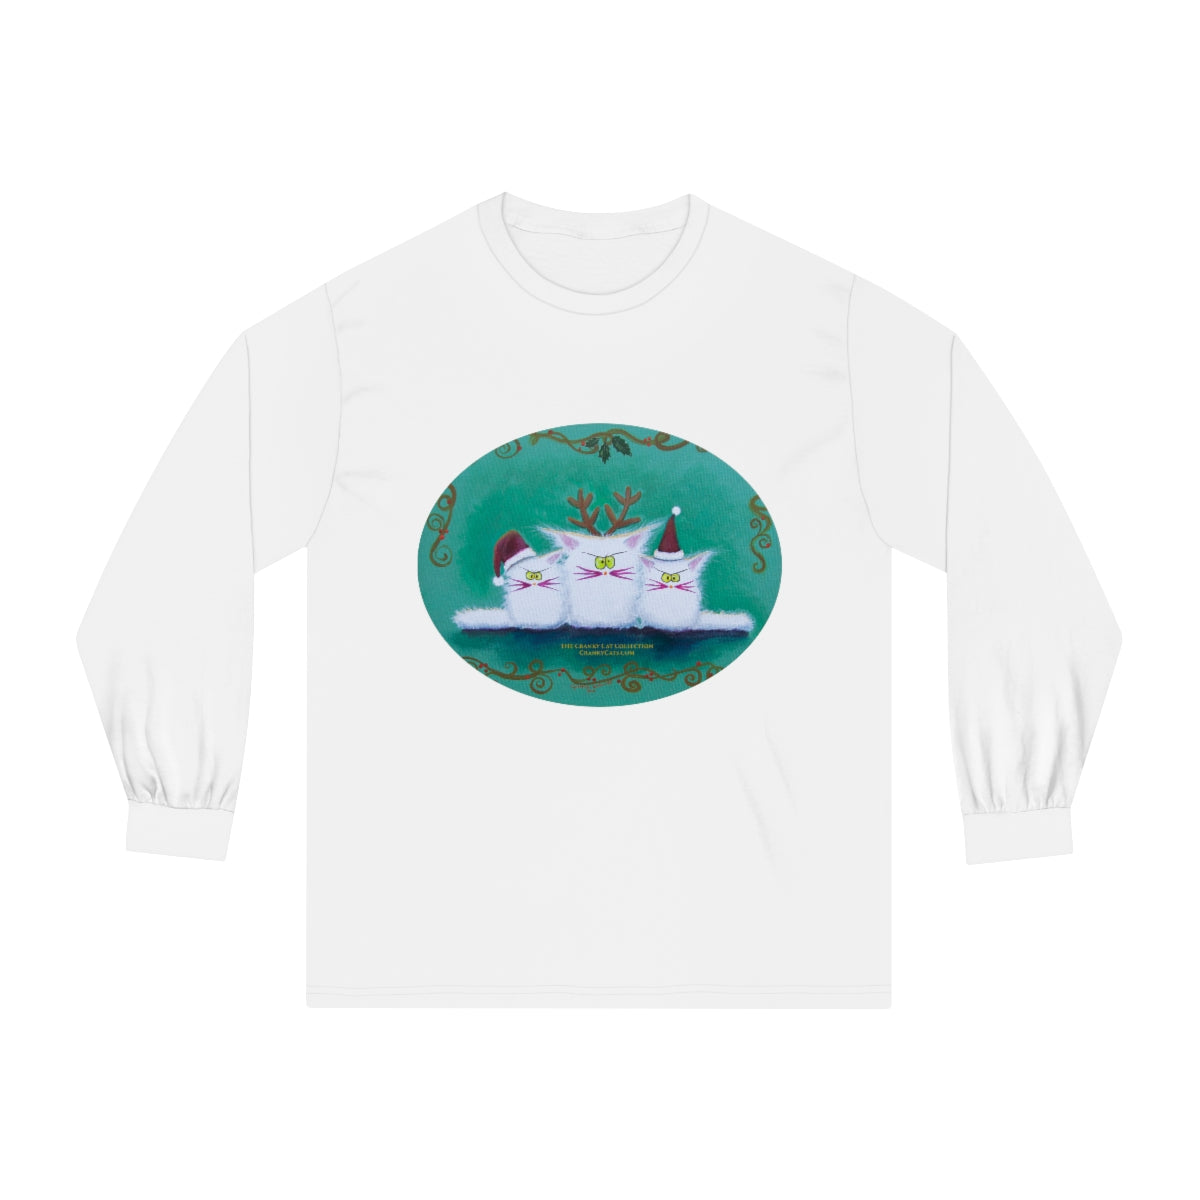 Christmas Cranky Cat Long Sleeve T-Shirt - Free Shipping!